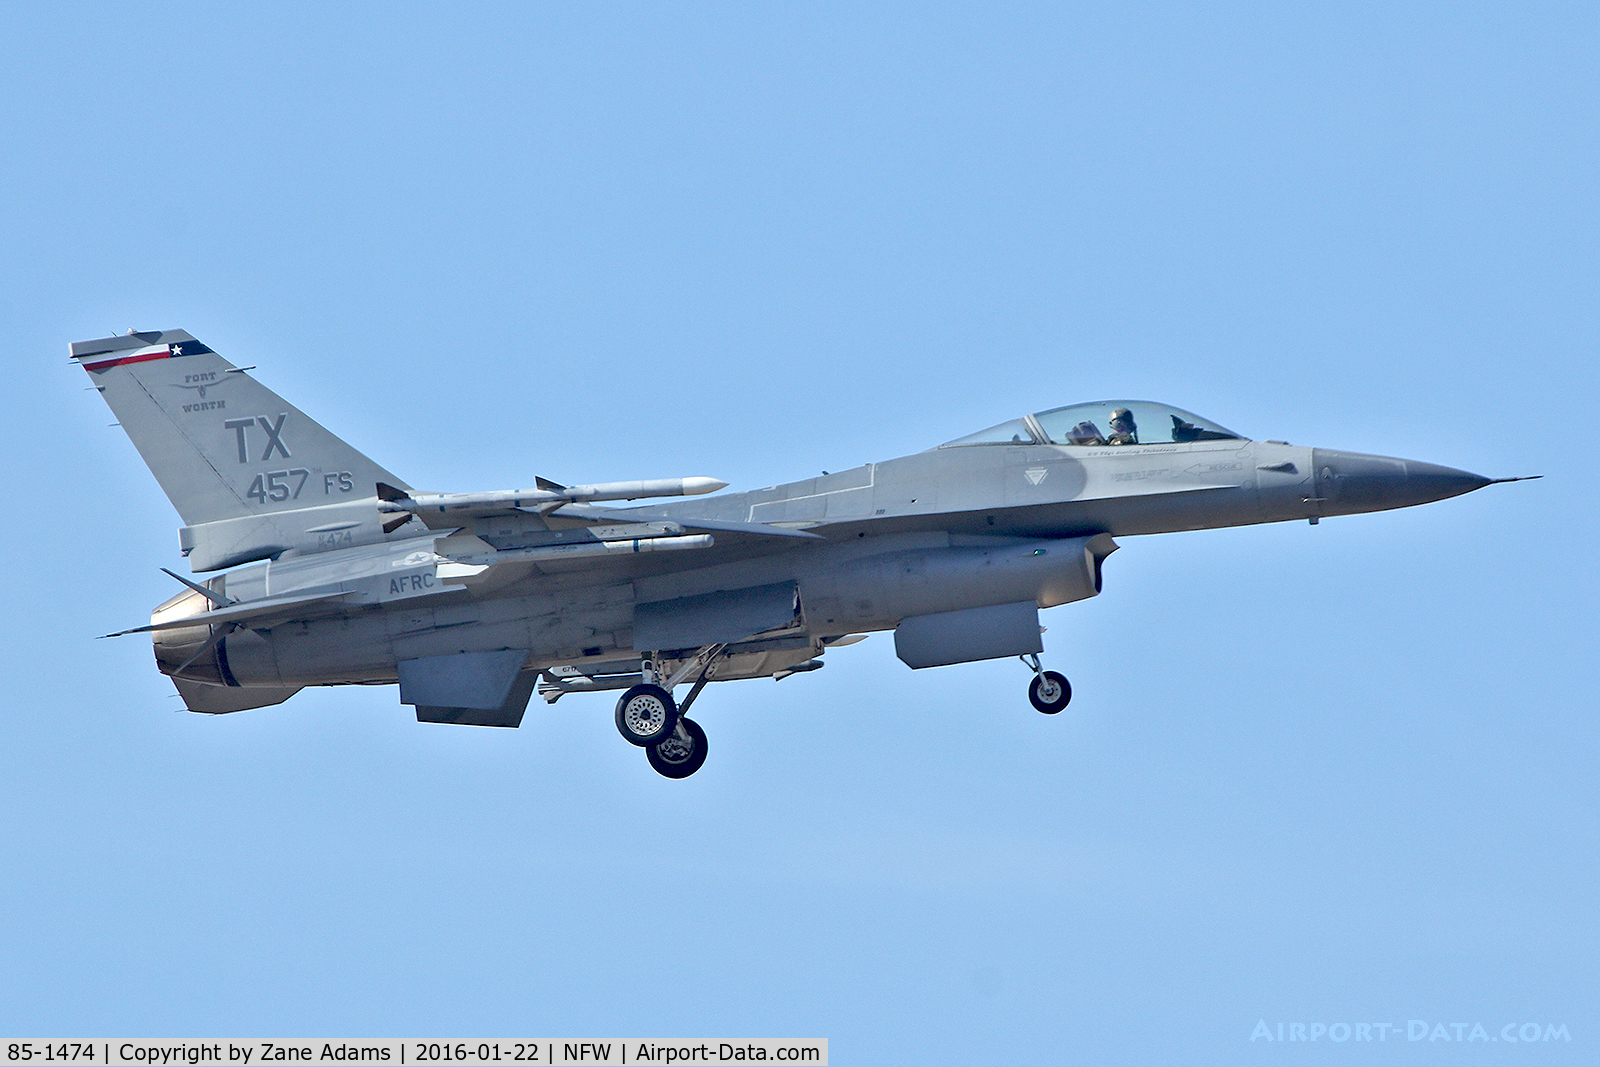 85-1474, 1985 General Dynamics F-16C Fighting Falcon C/N 5C-254, Landing at NAS Fort Worth